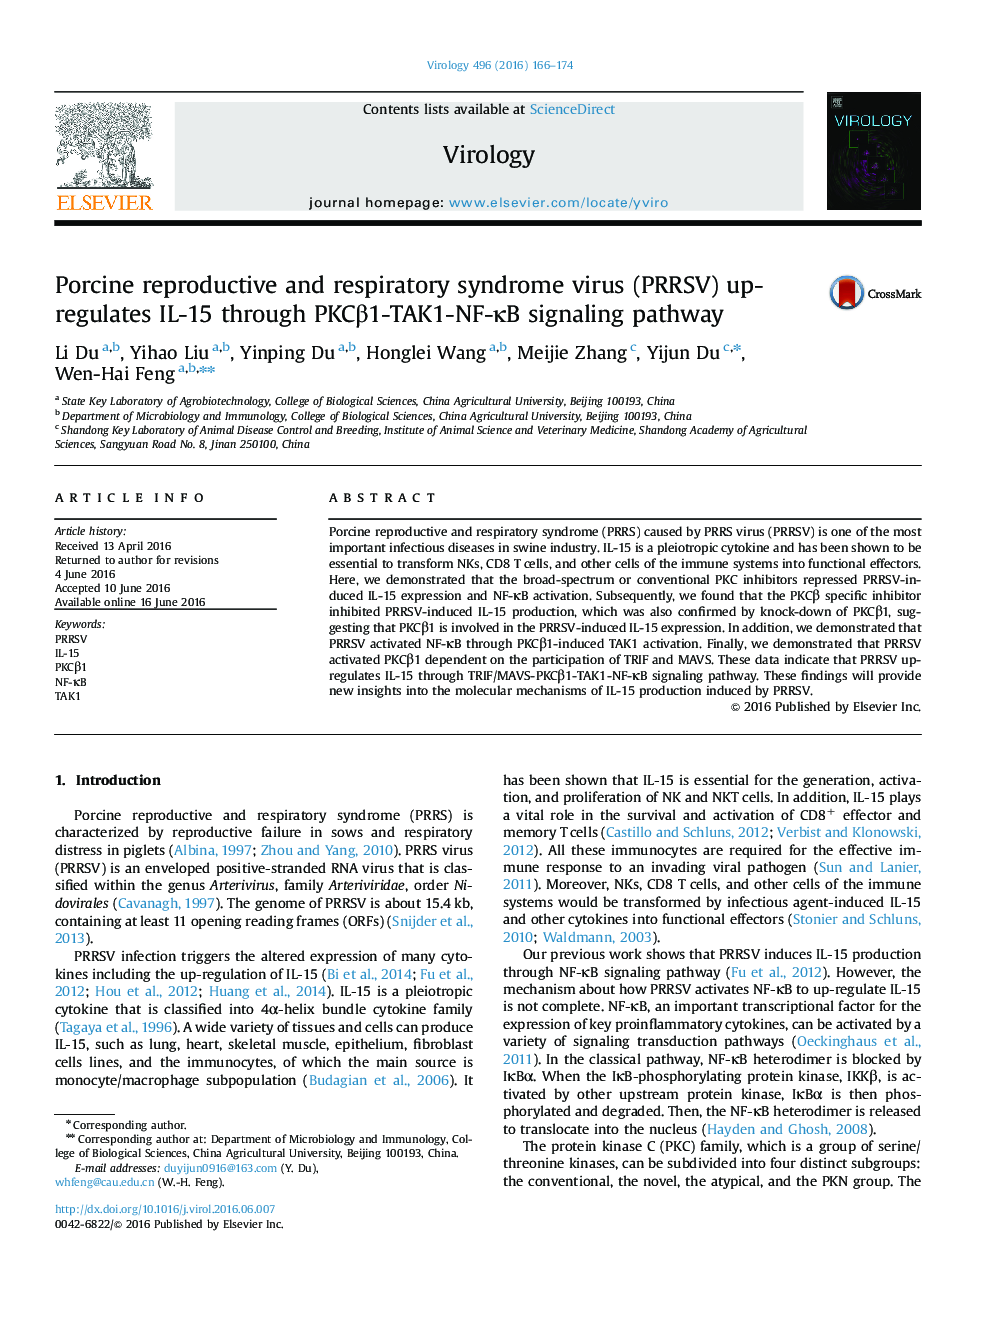 Porcine reproductive and respiratory syndrome virus (PRRSV) up-regulates IL-15 through PKCÎ²1-TAK1-NF-ÎºB signaling pathway